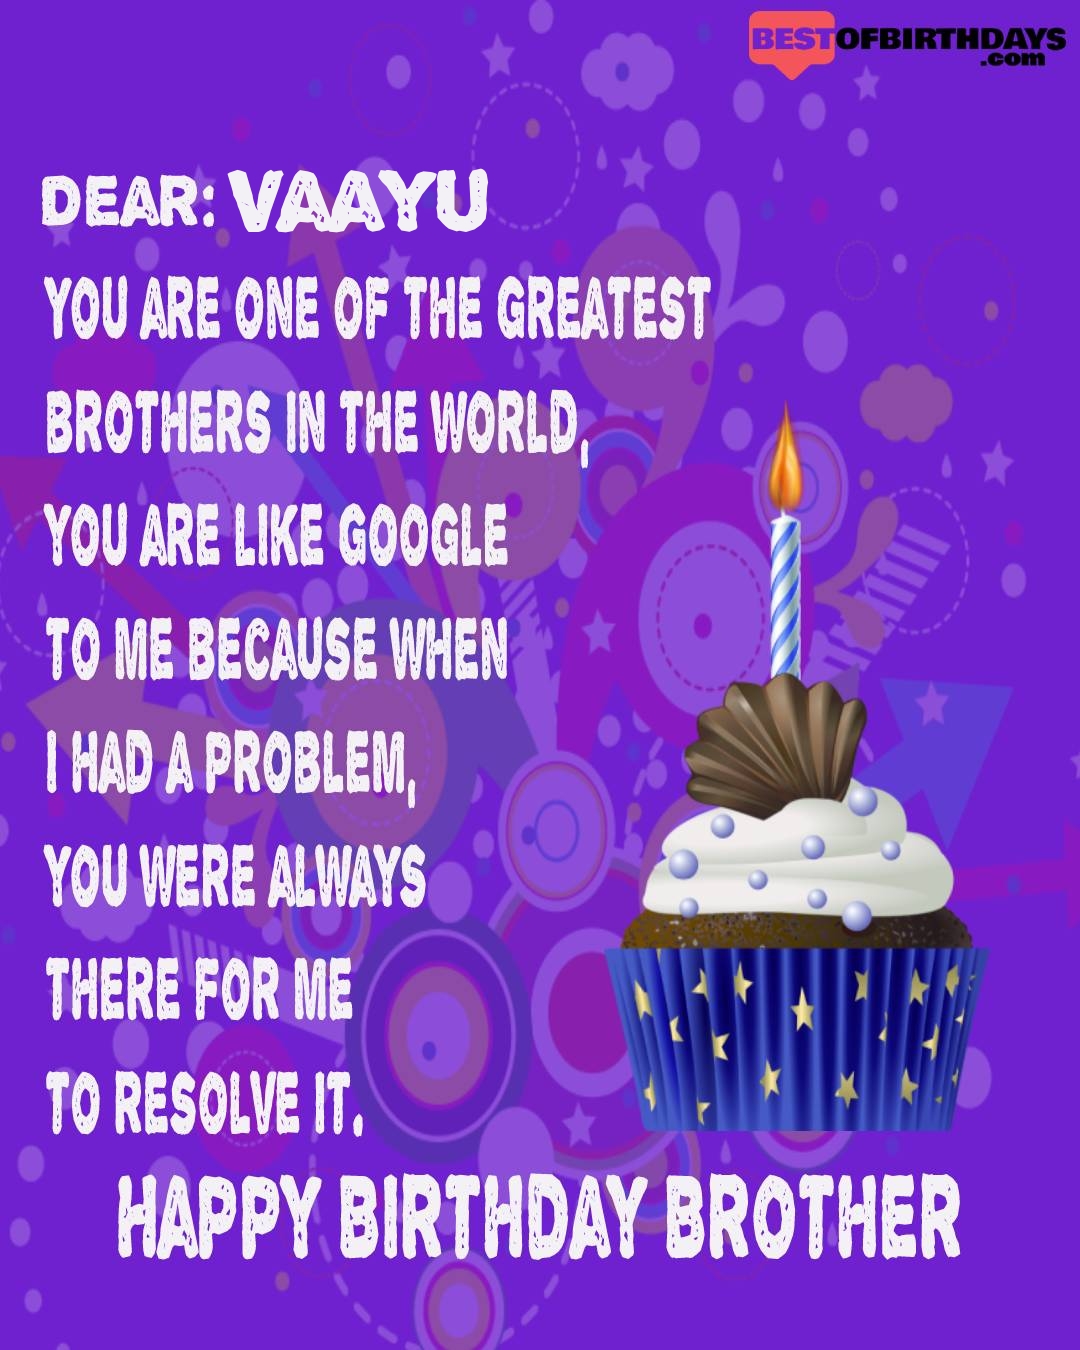 Happy birthday vaayu bhai brother bro